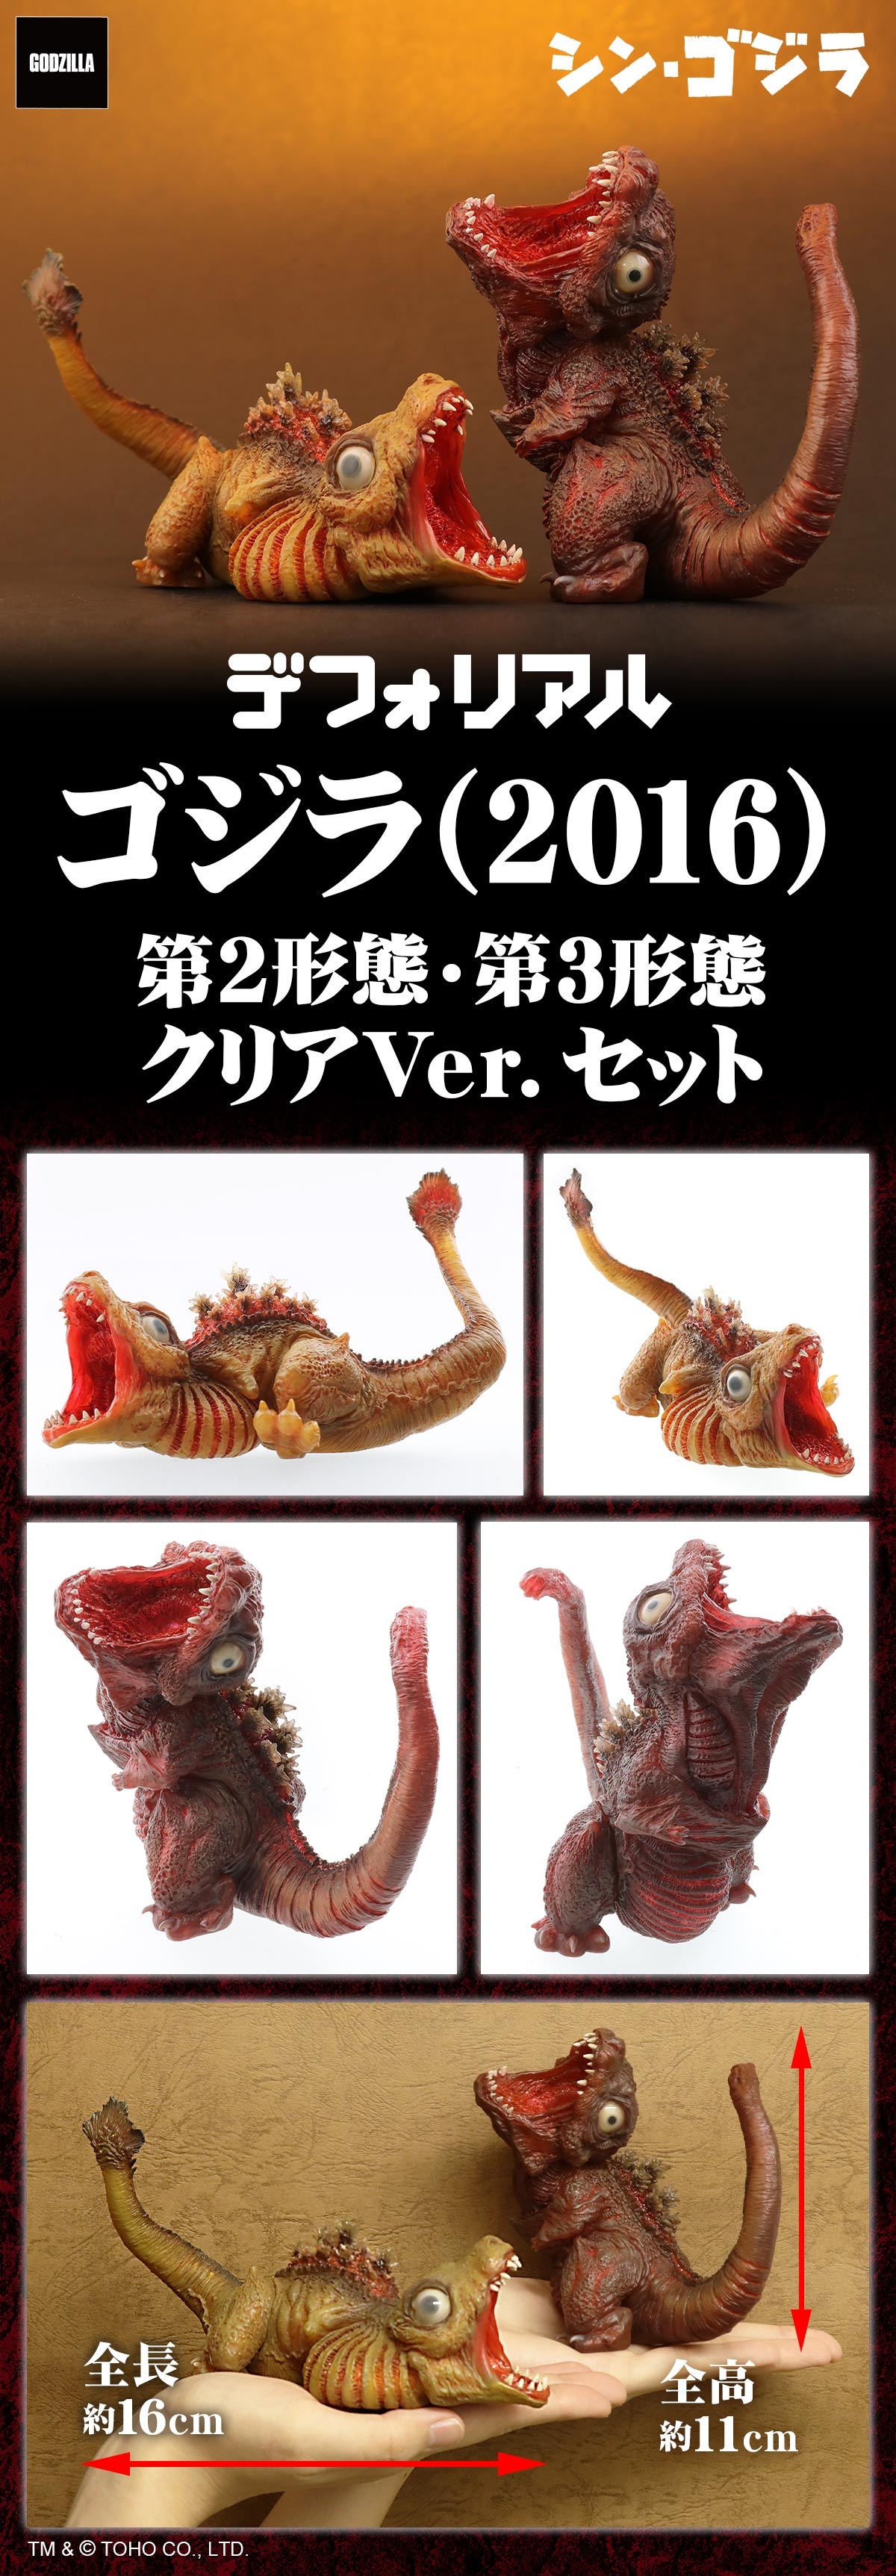 Godzilla2016 2nd3rd promotional picture